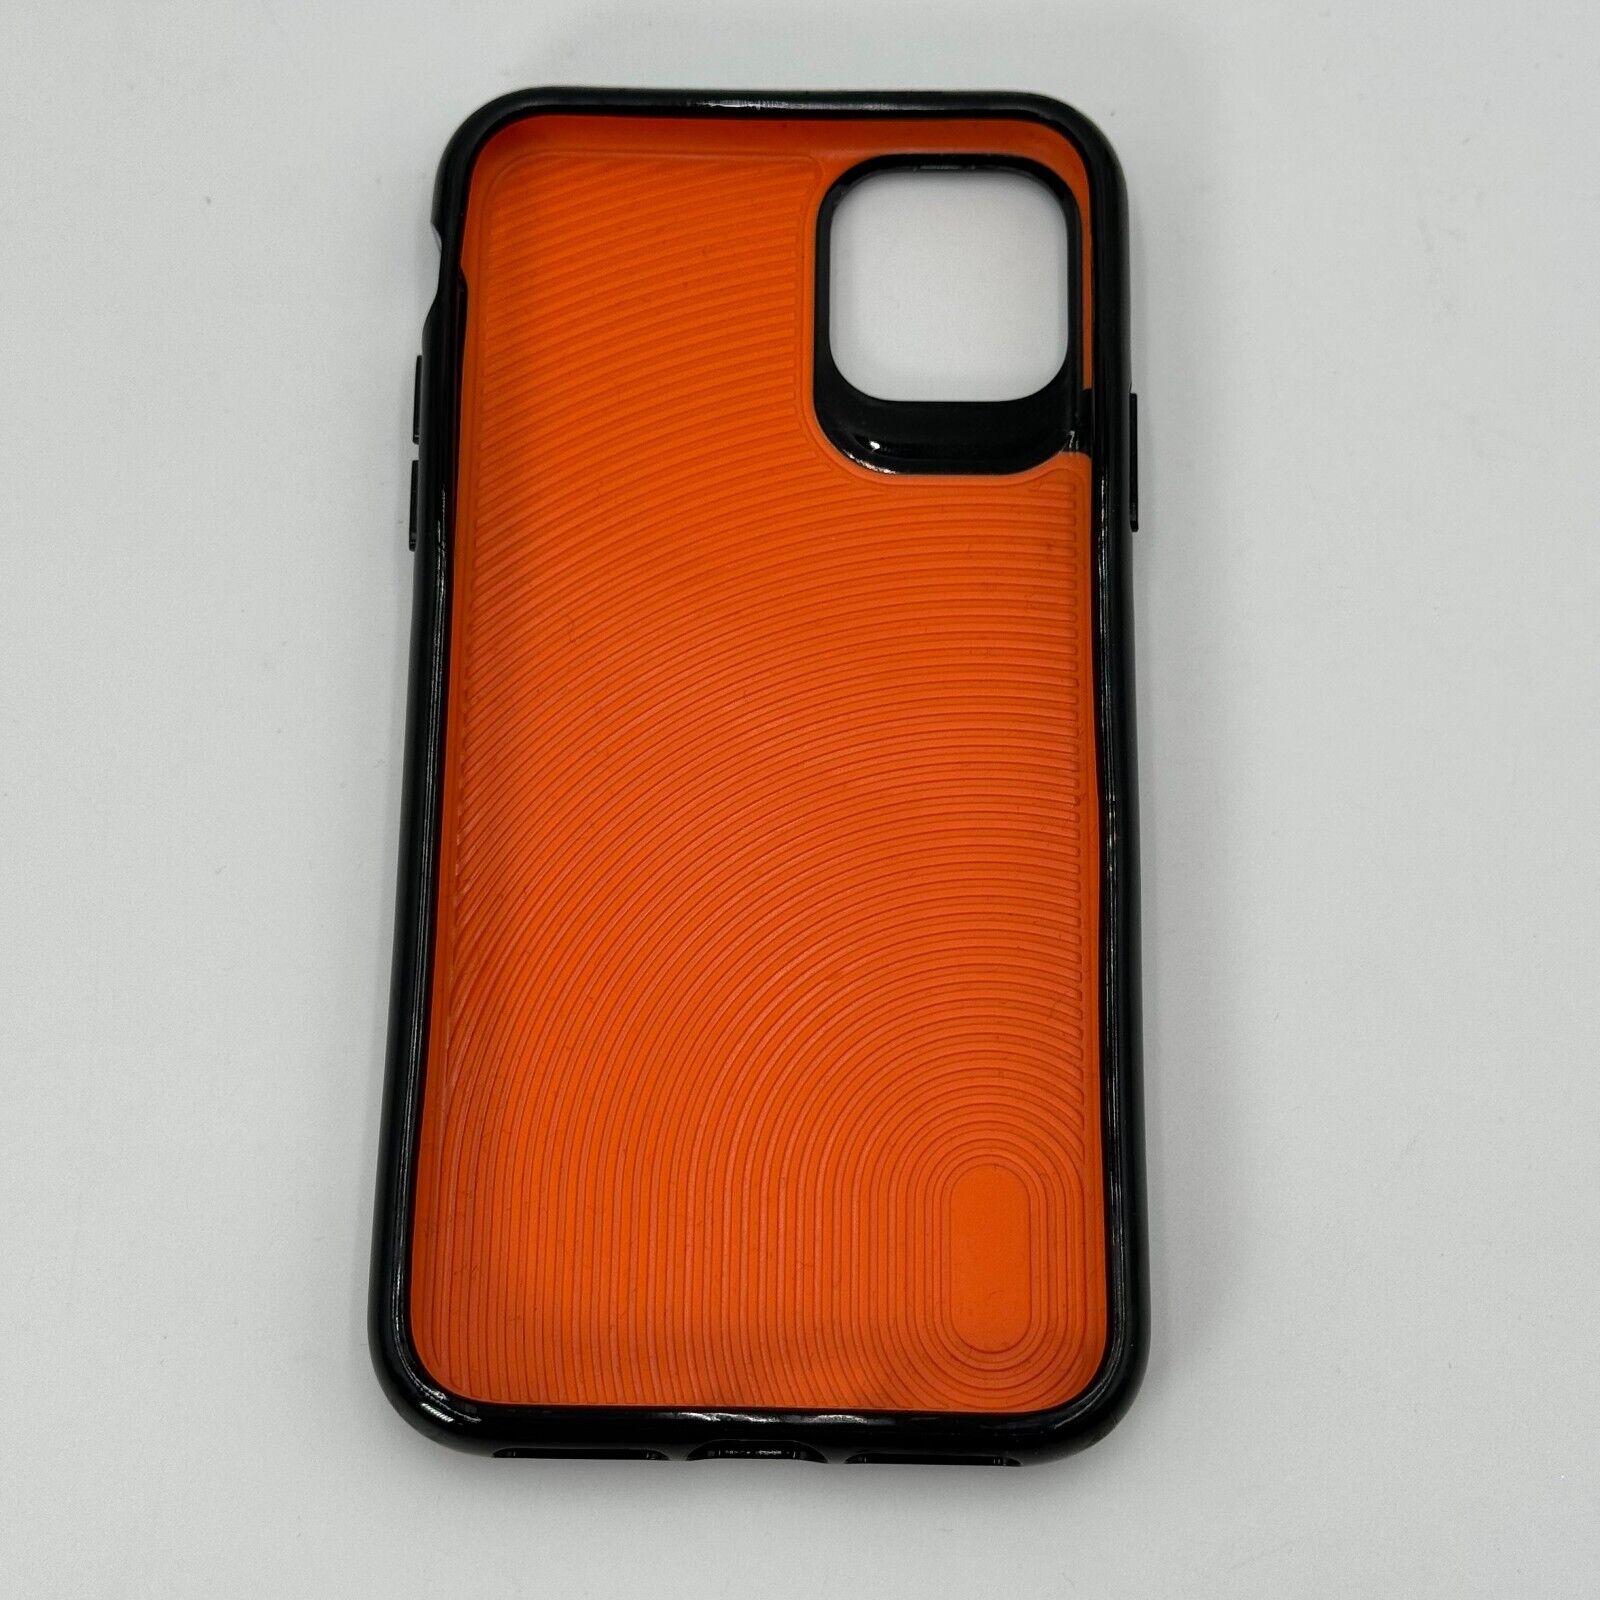 Gear4 Battersea Slim Case for iPhone 11 Pro Max D30 16ft Drop Black Orange - New